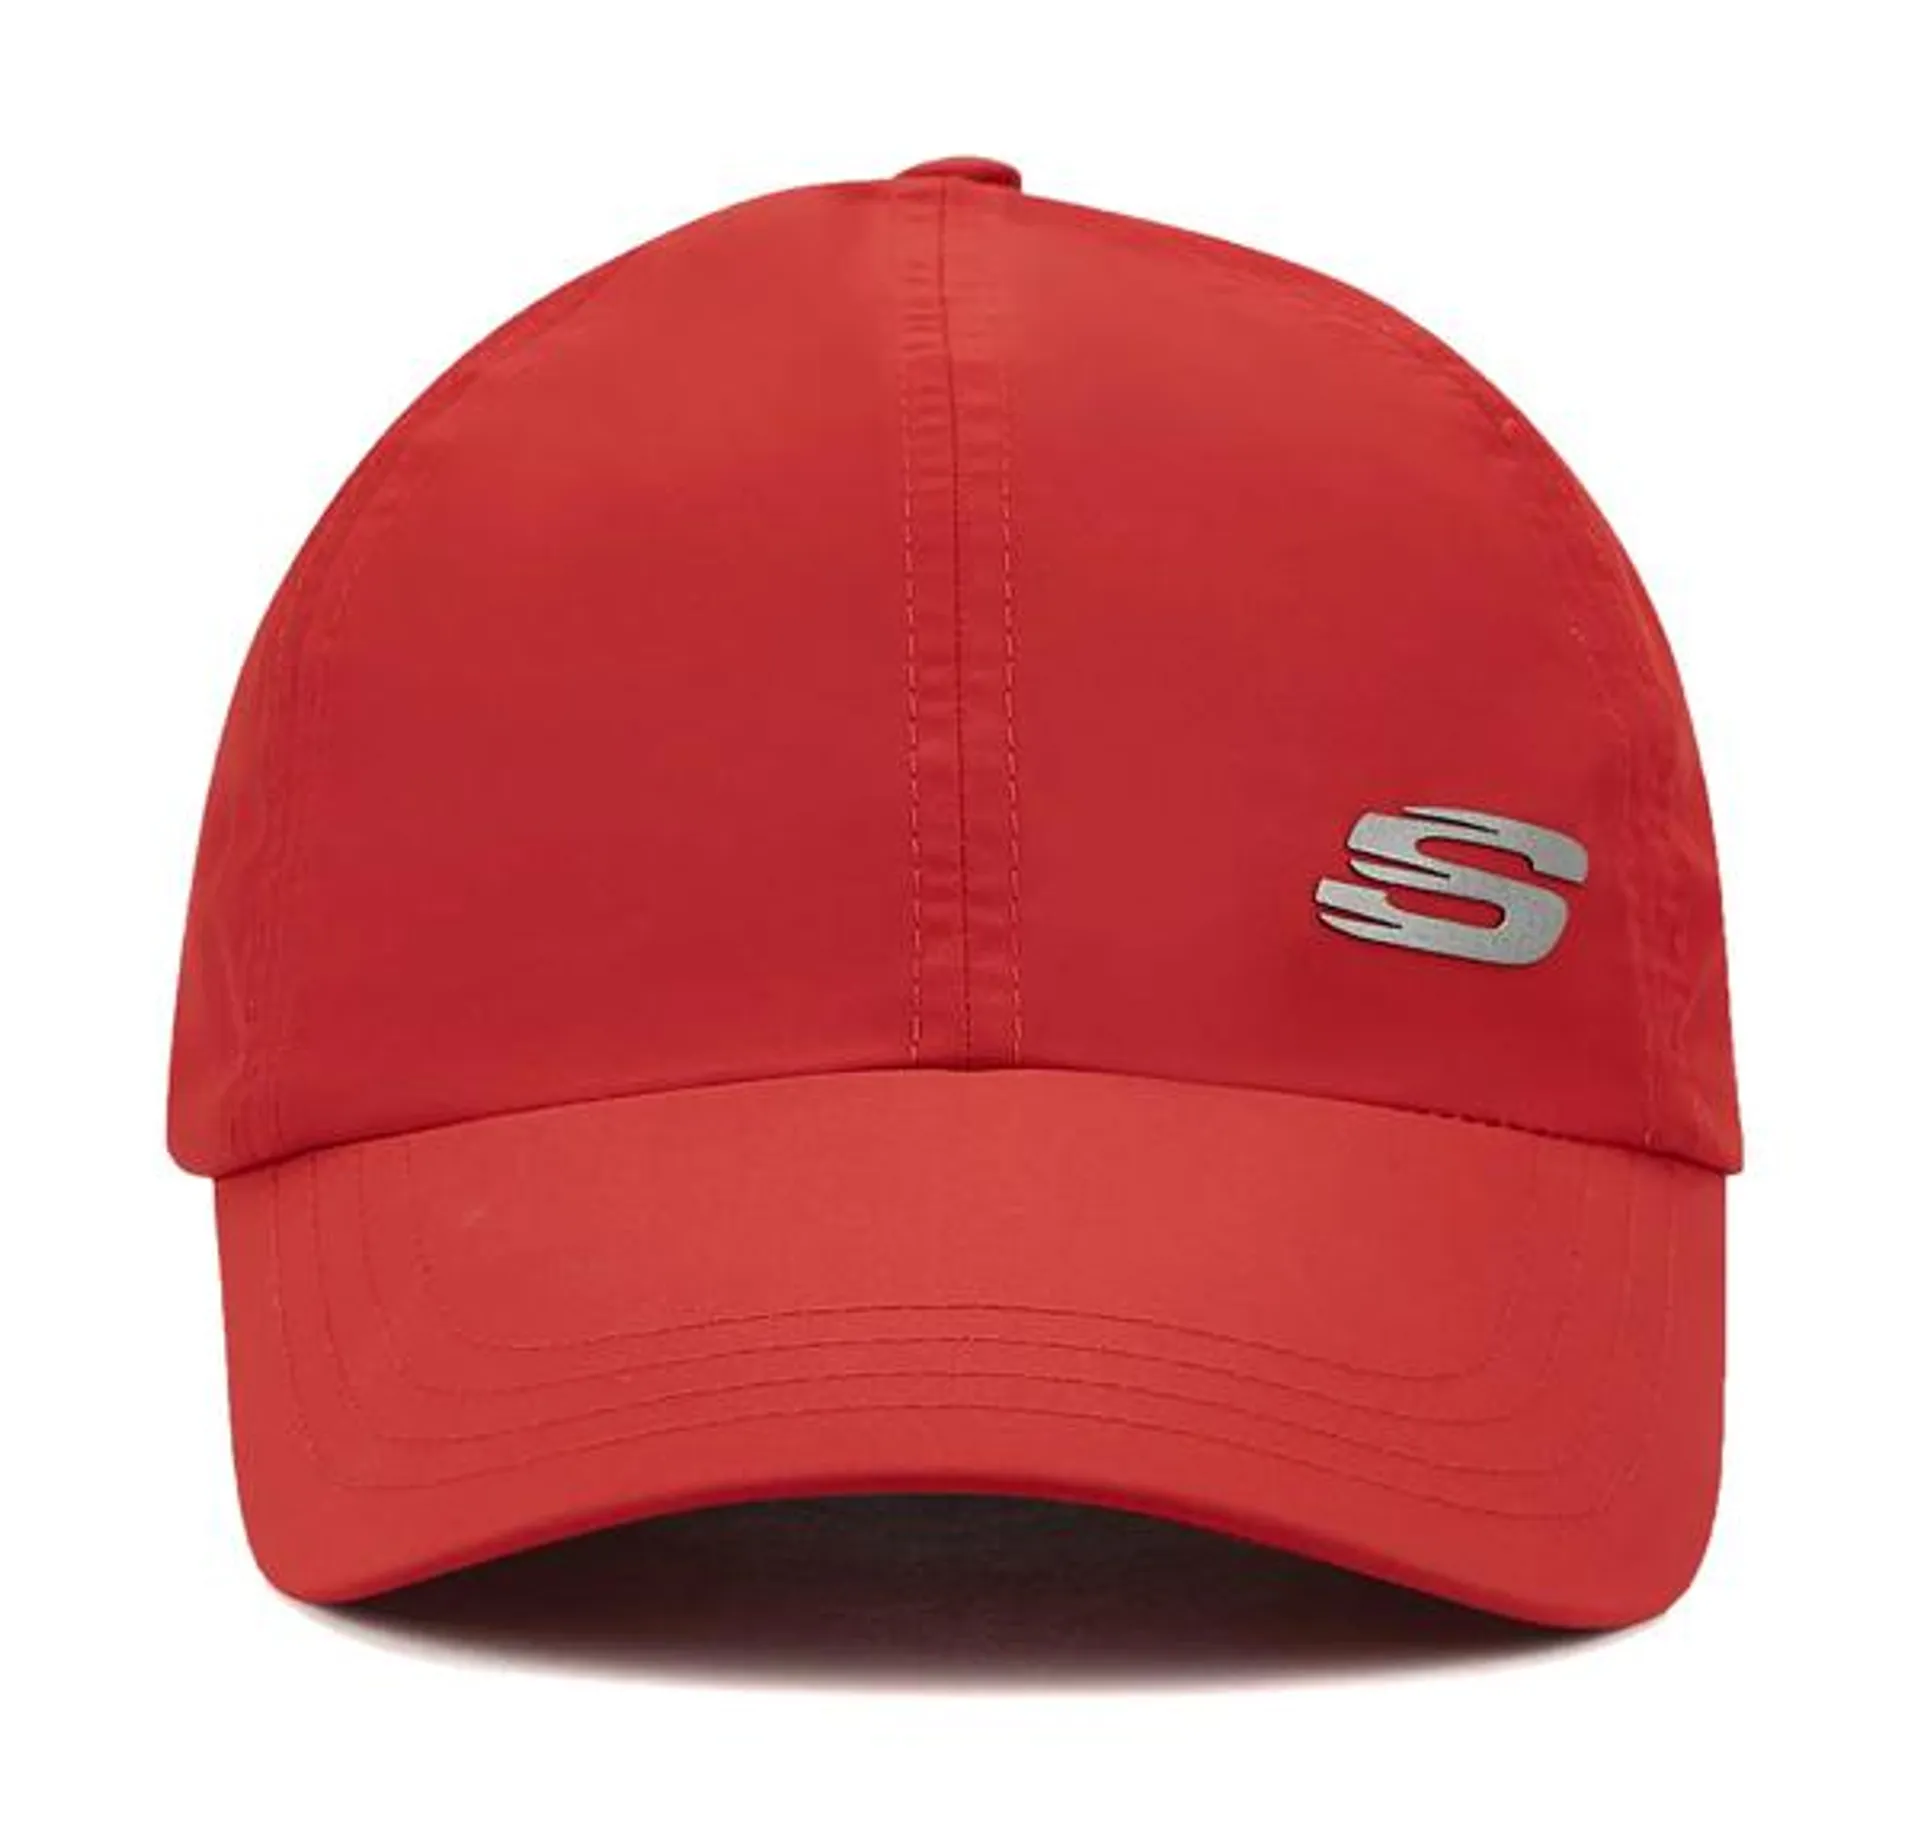 Skechers Summer Acc M Cap Headwear Erkek Şapka Kırmızı